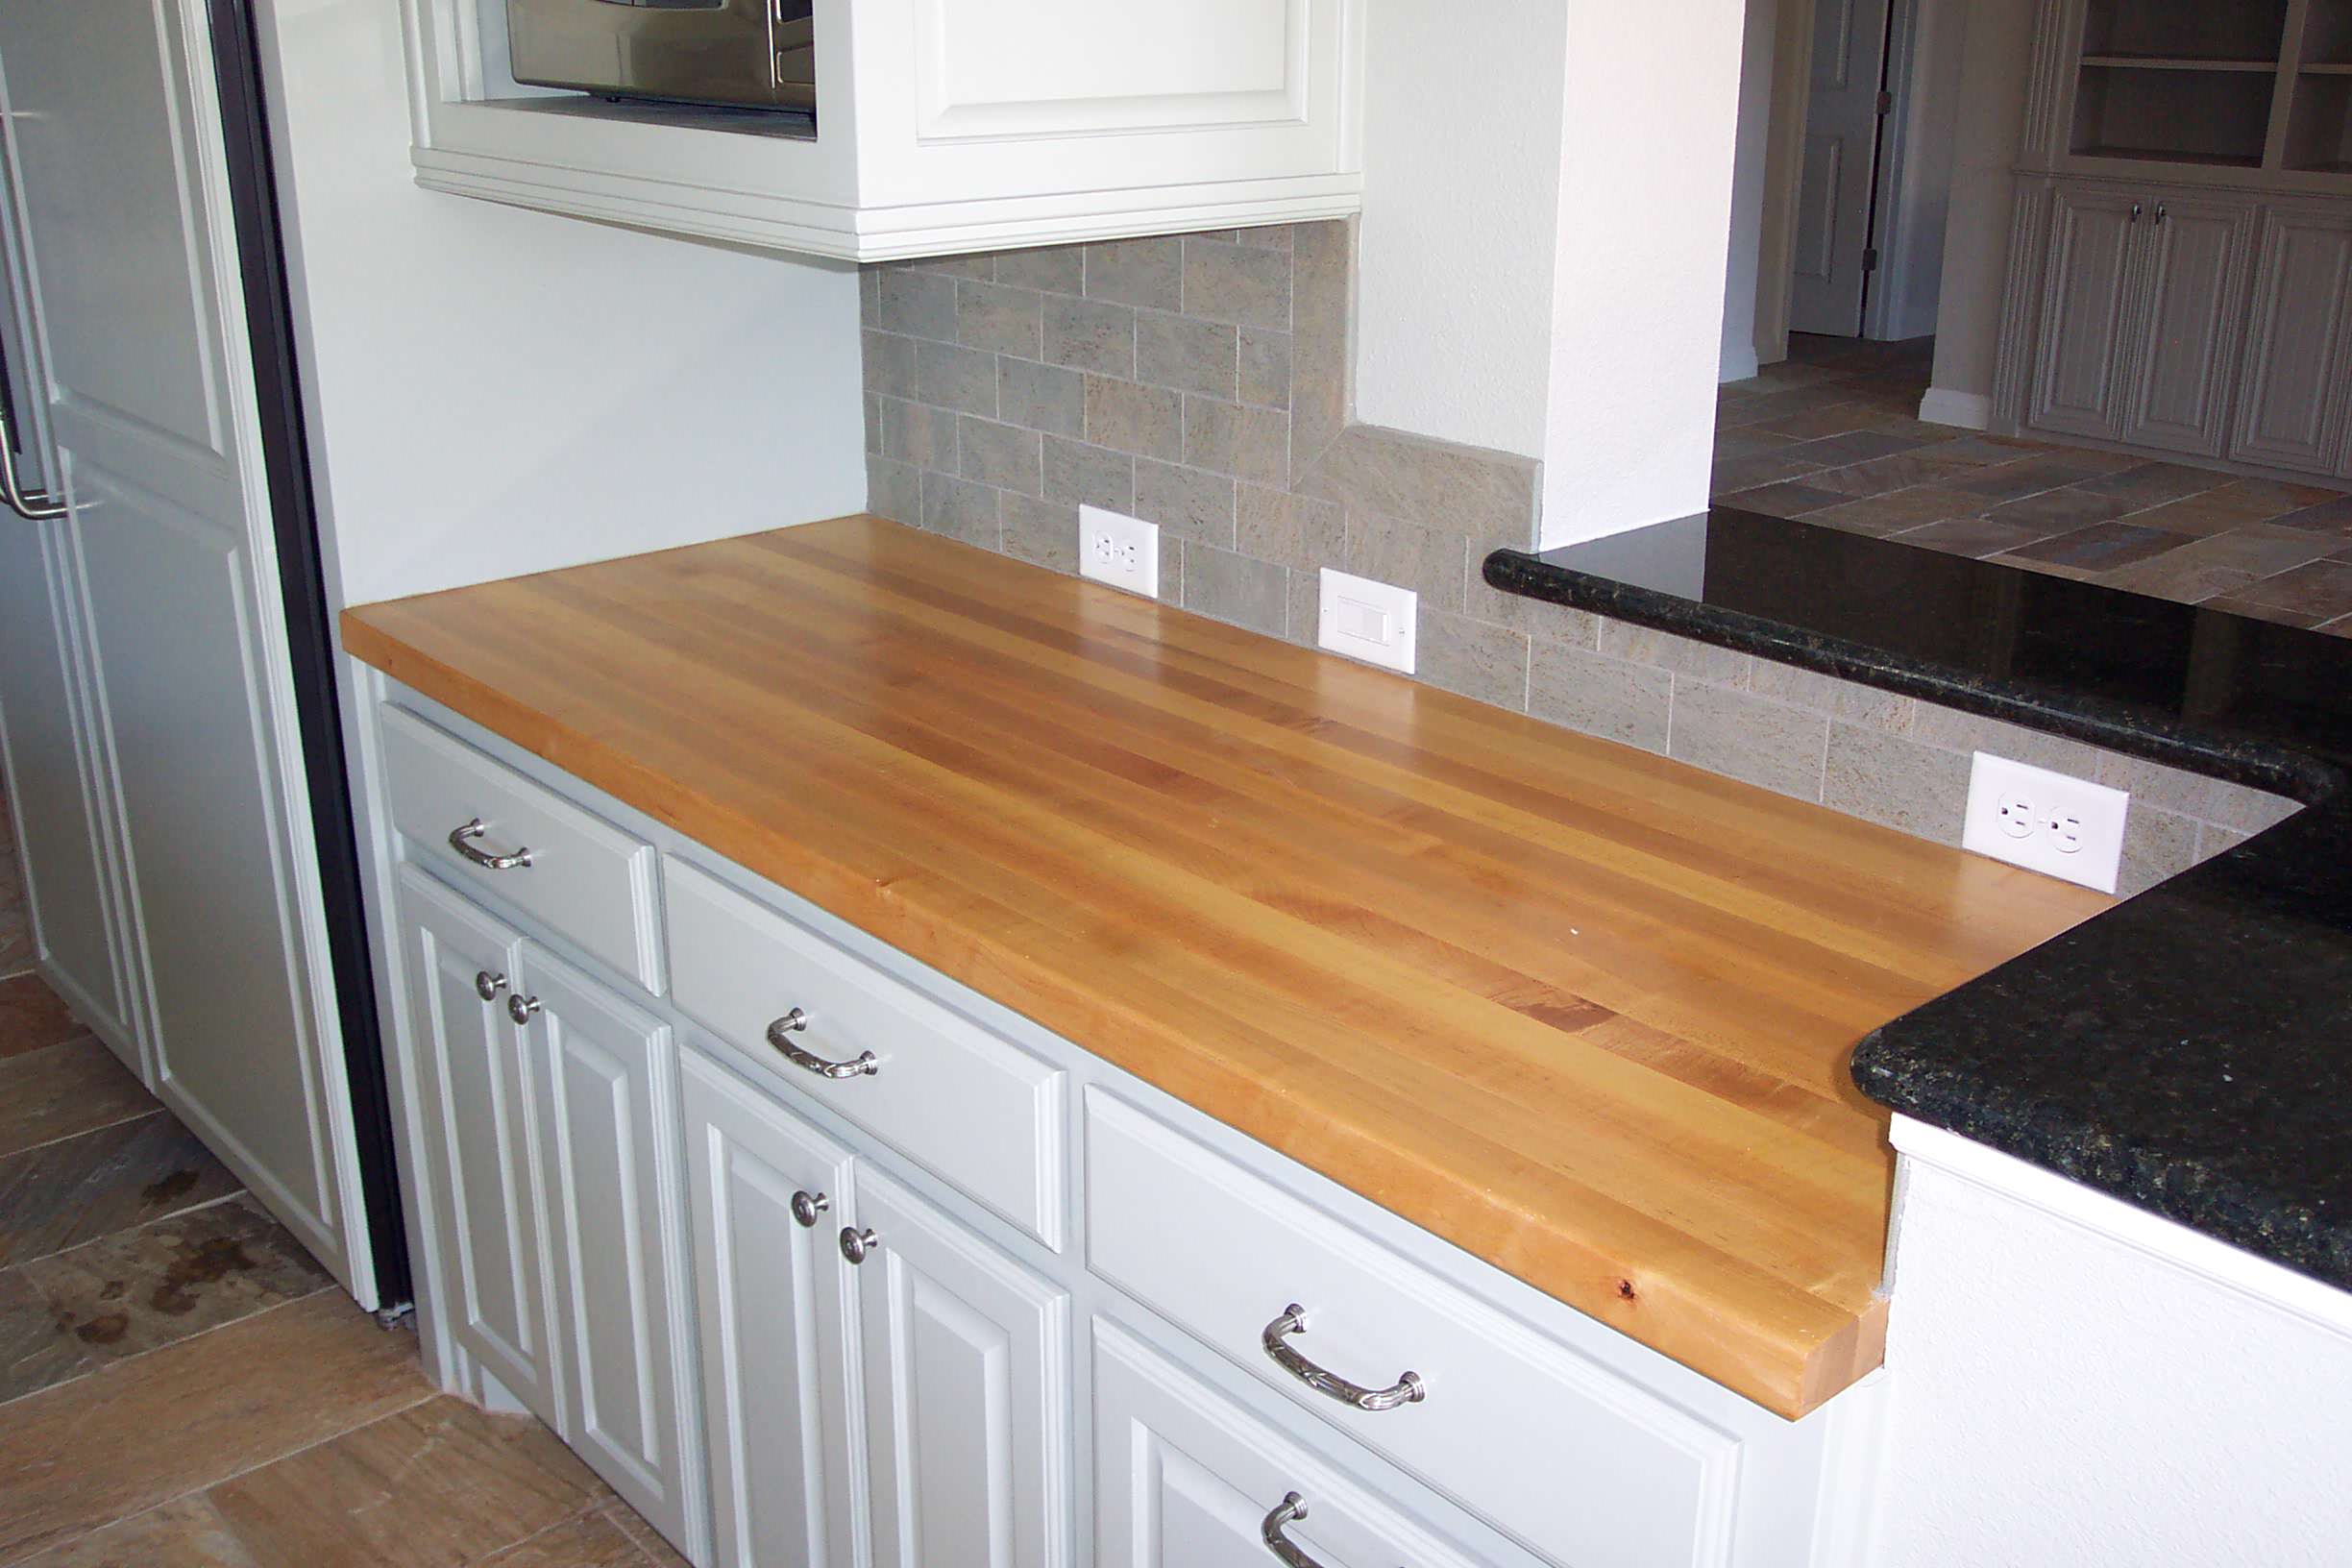 Maple Edge grain wood counter tops